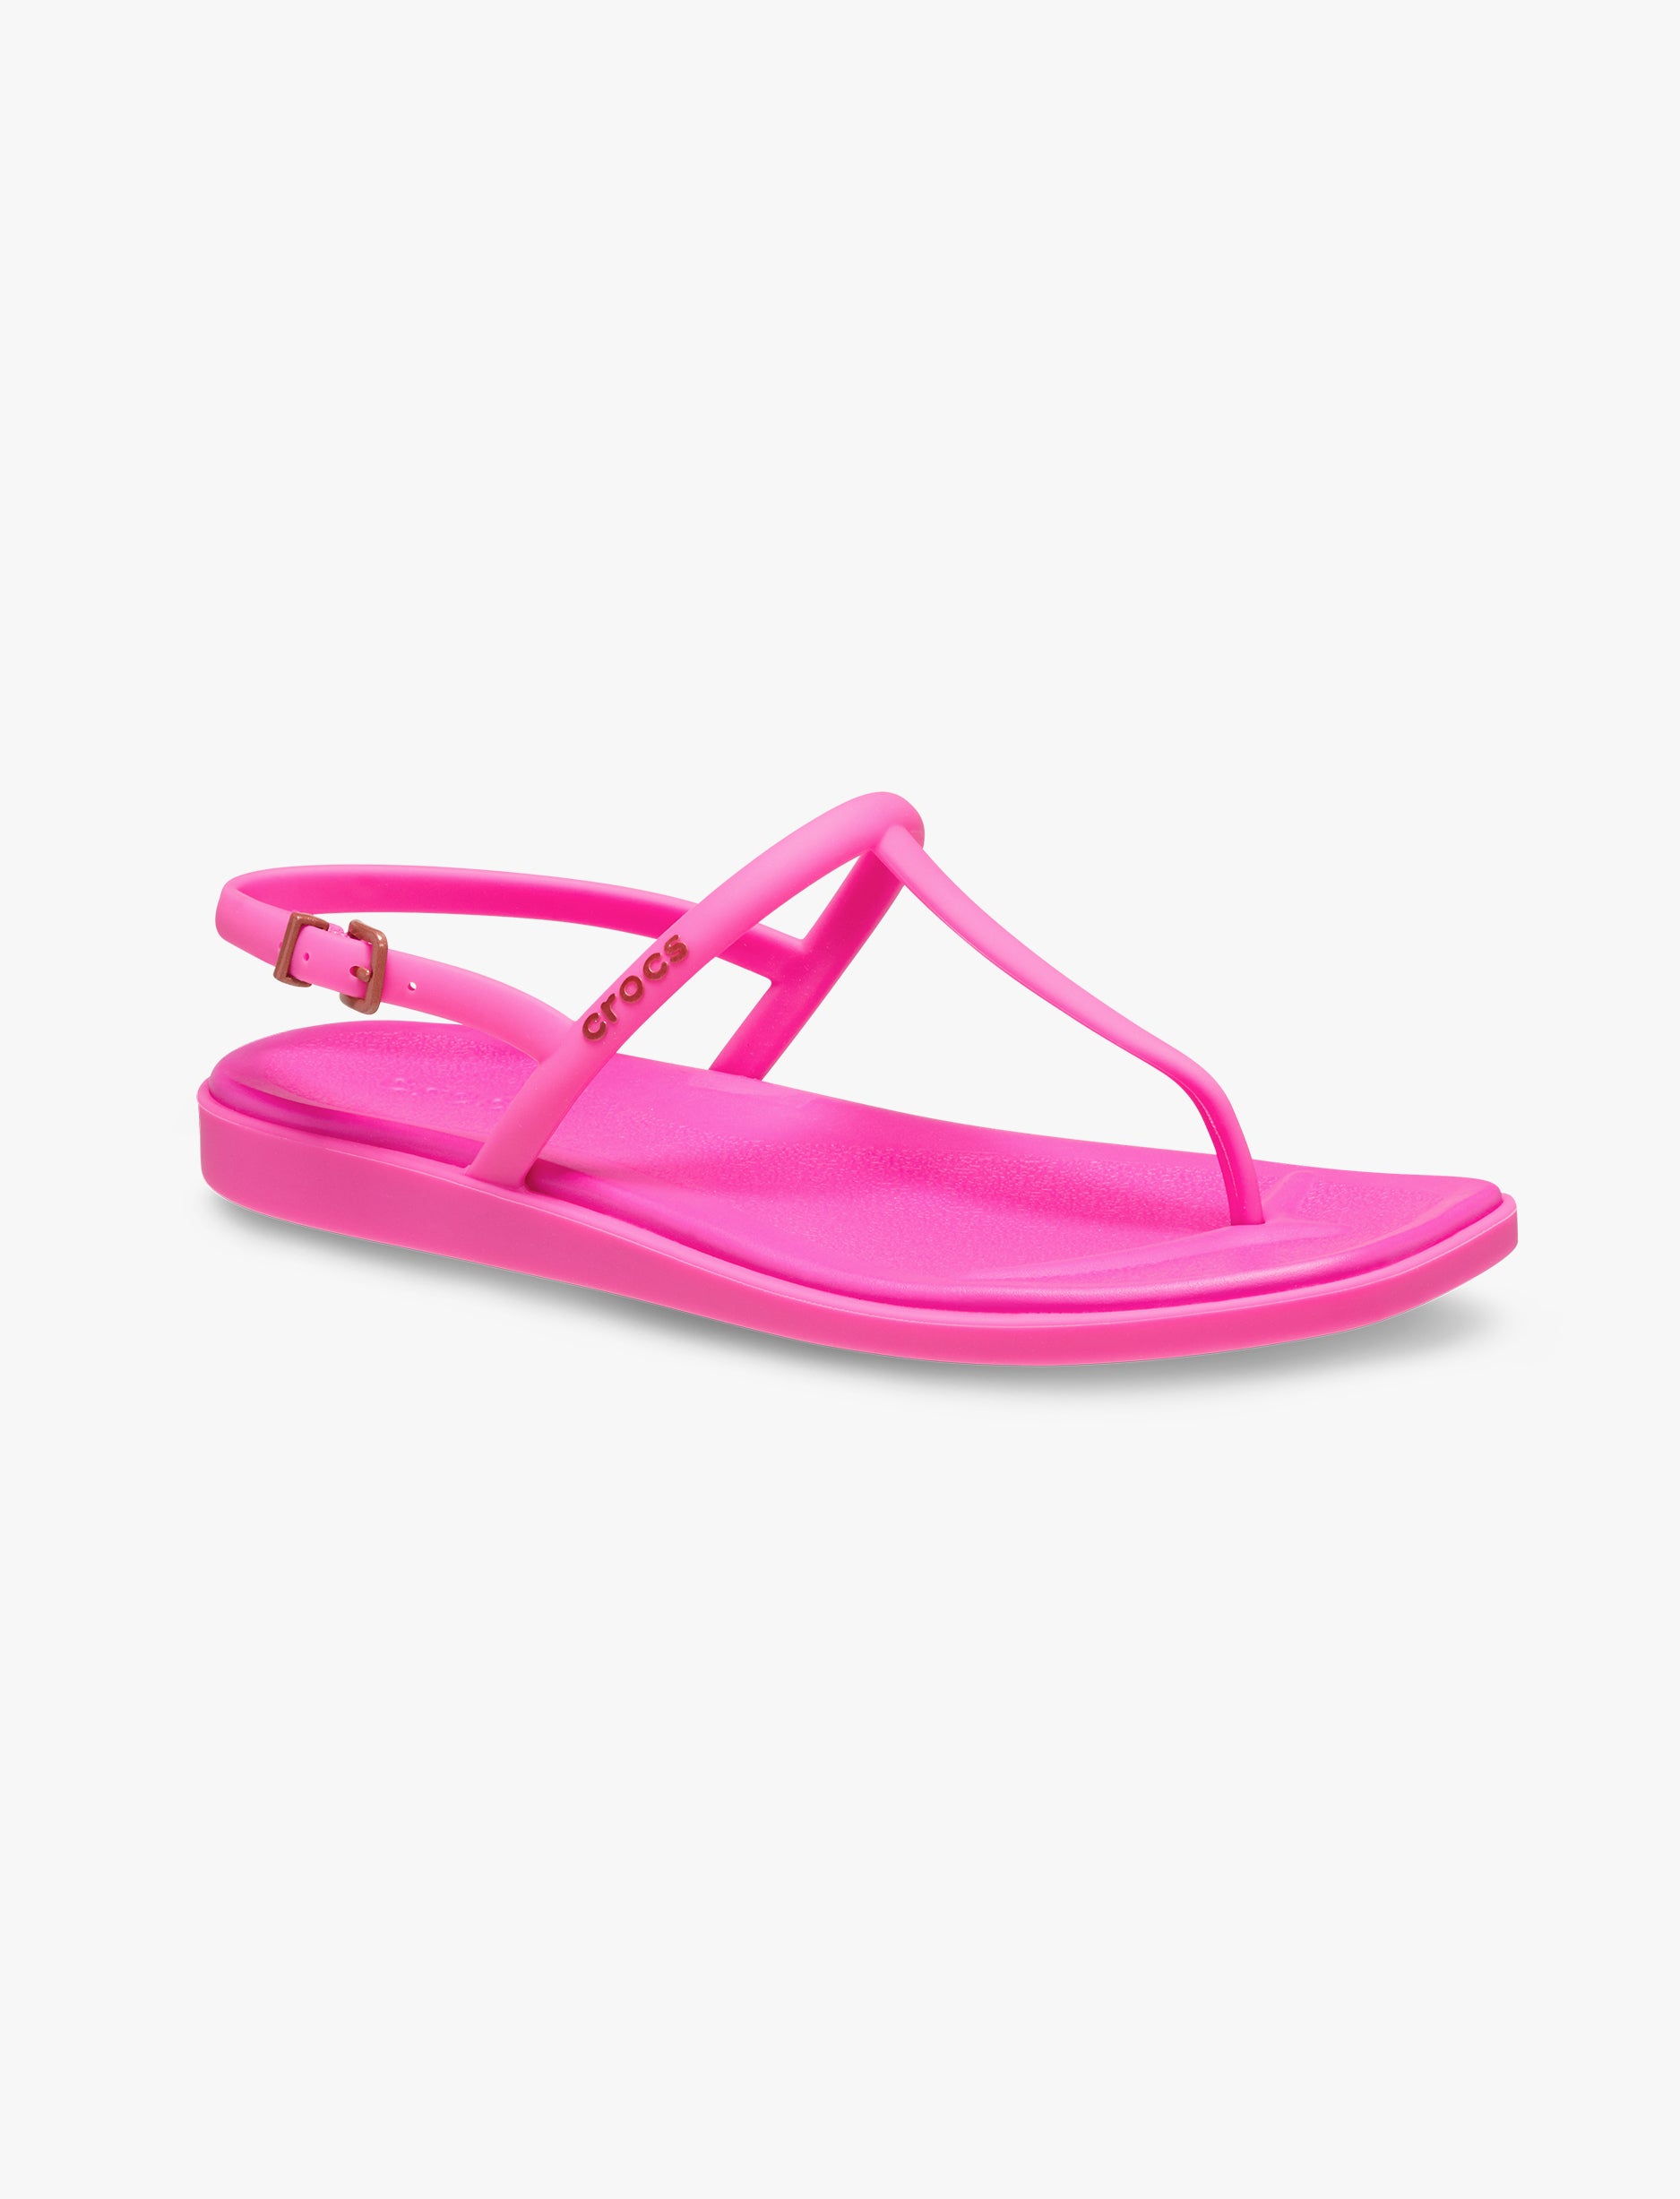 Miami Thong Sandal Crocs - סנדלי אצבע קרוקס לנשים בצבע ורוד